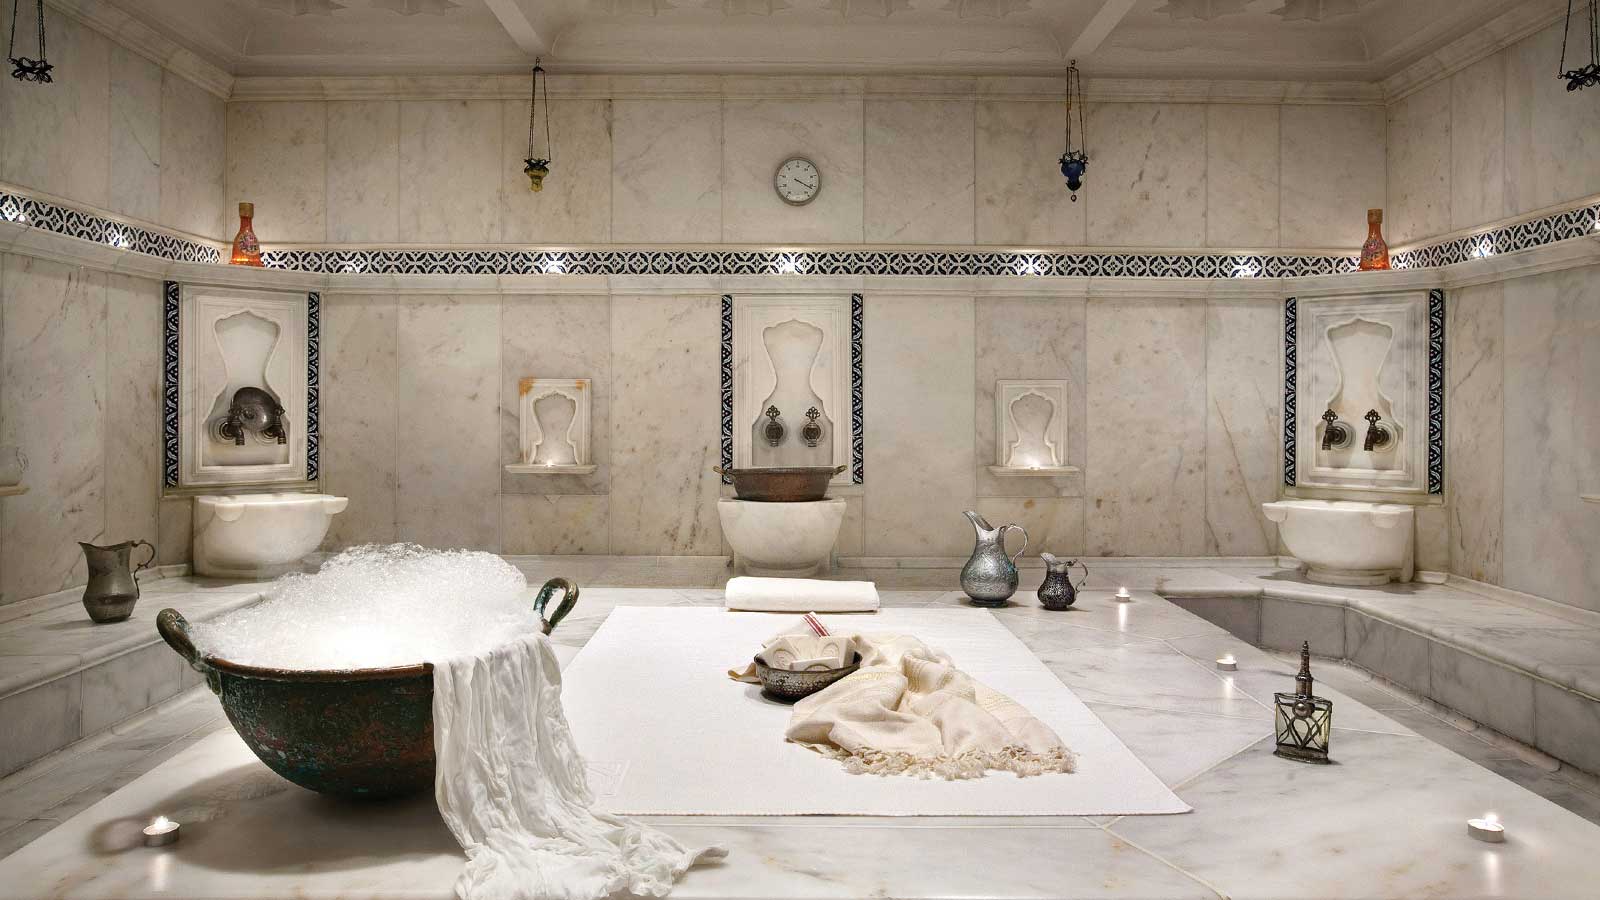 Turkish bath (hamam) .